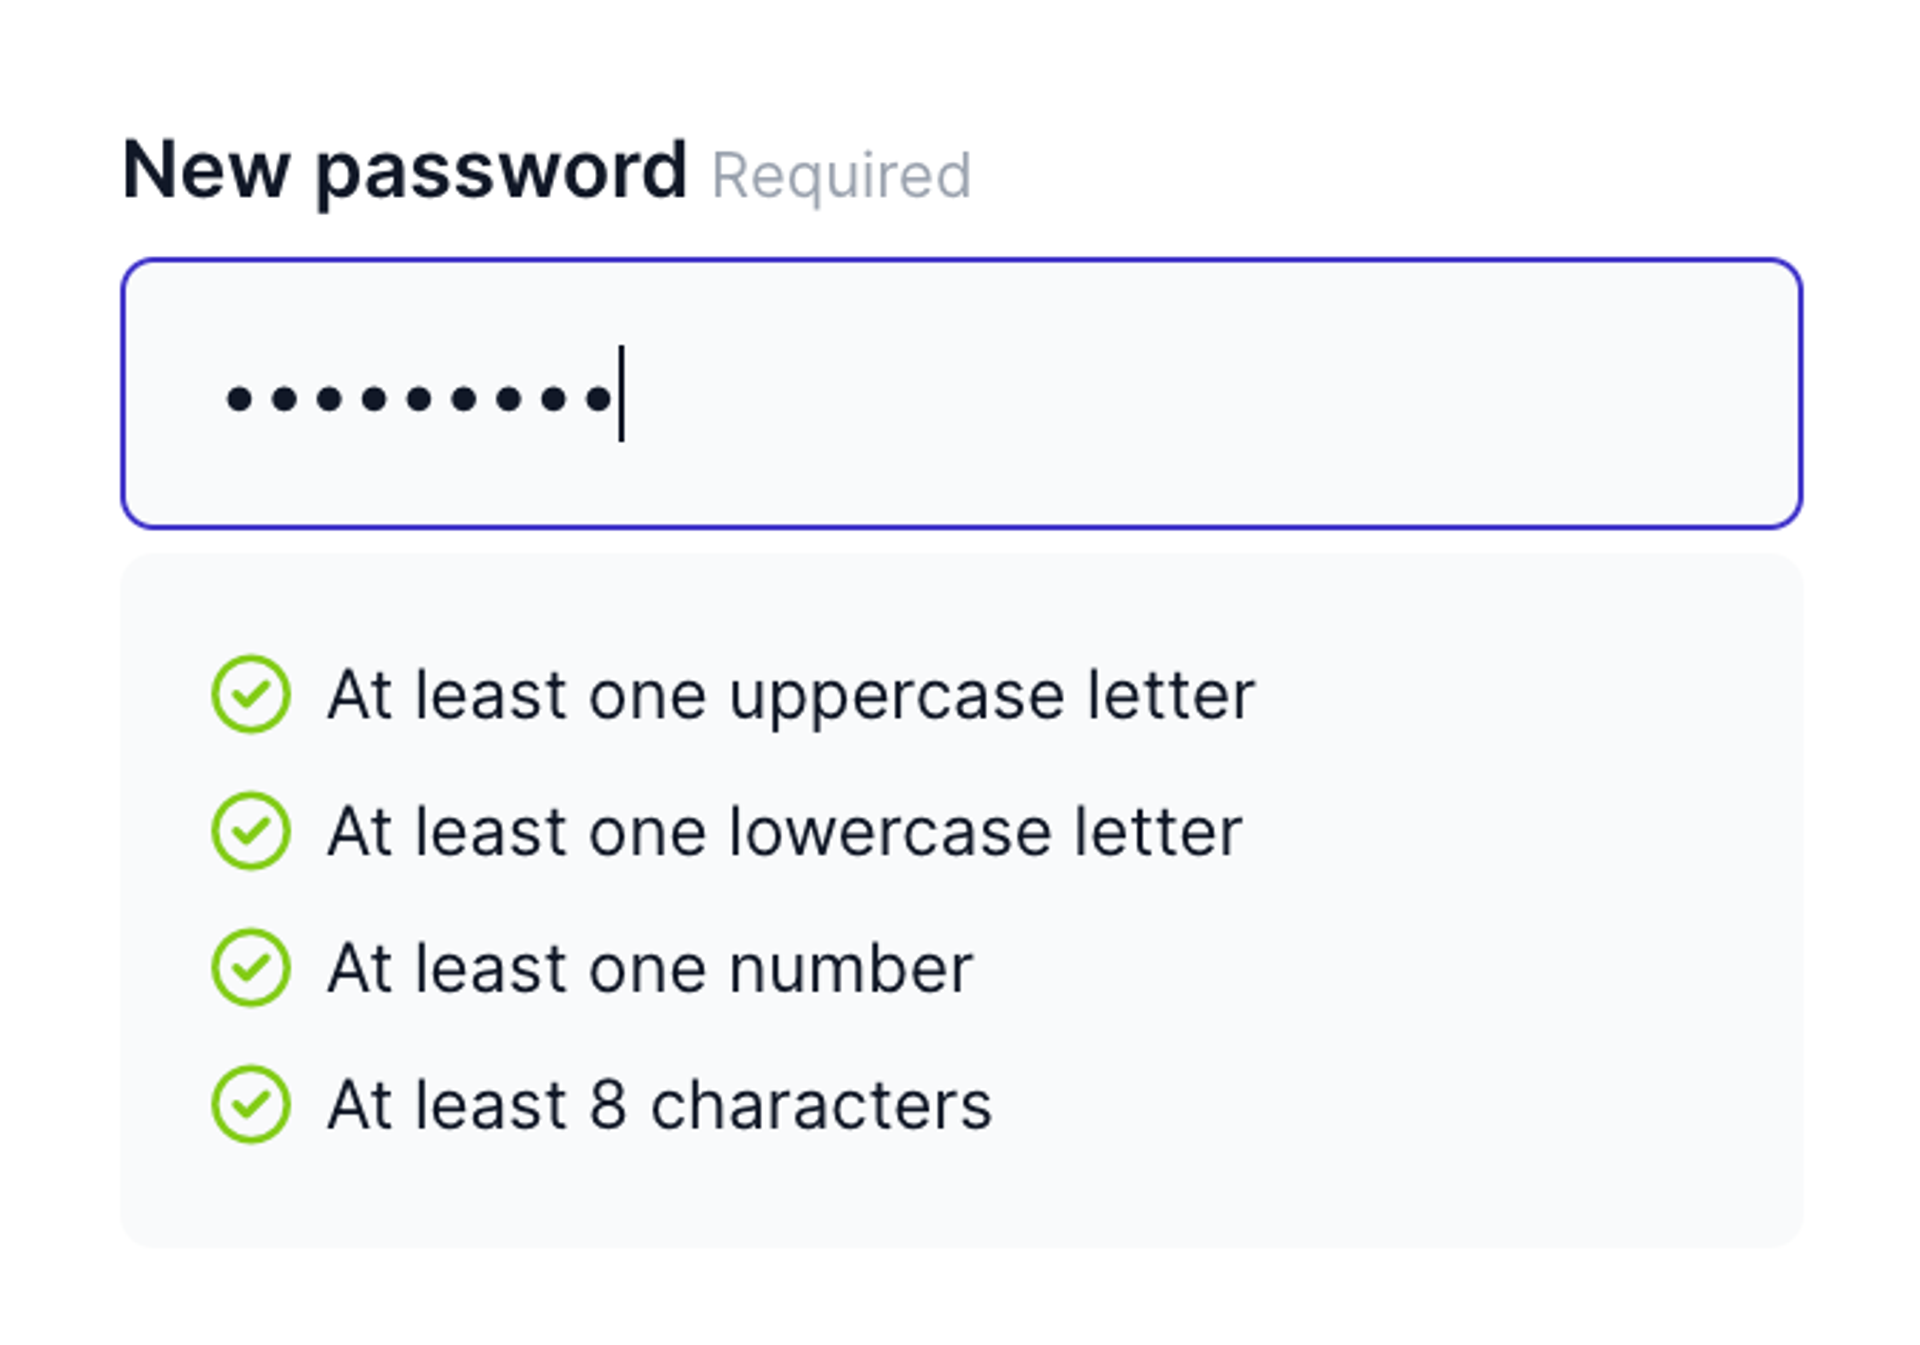 Strong password criteria